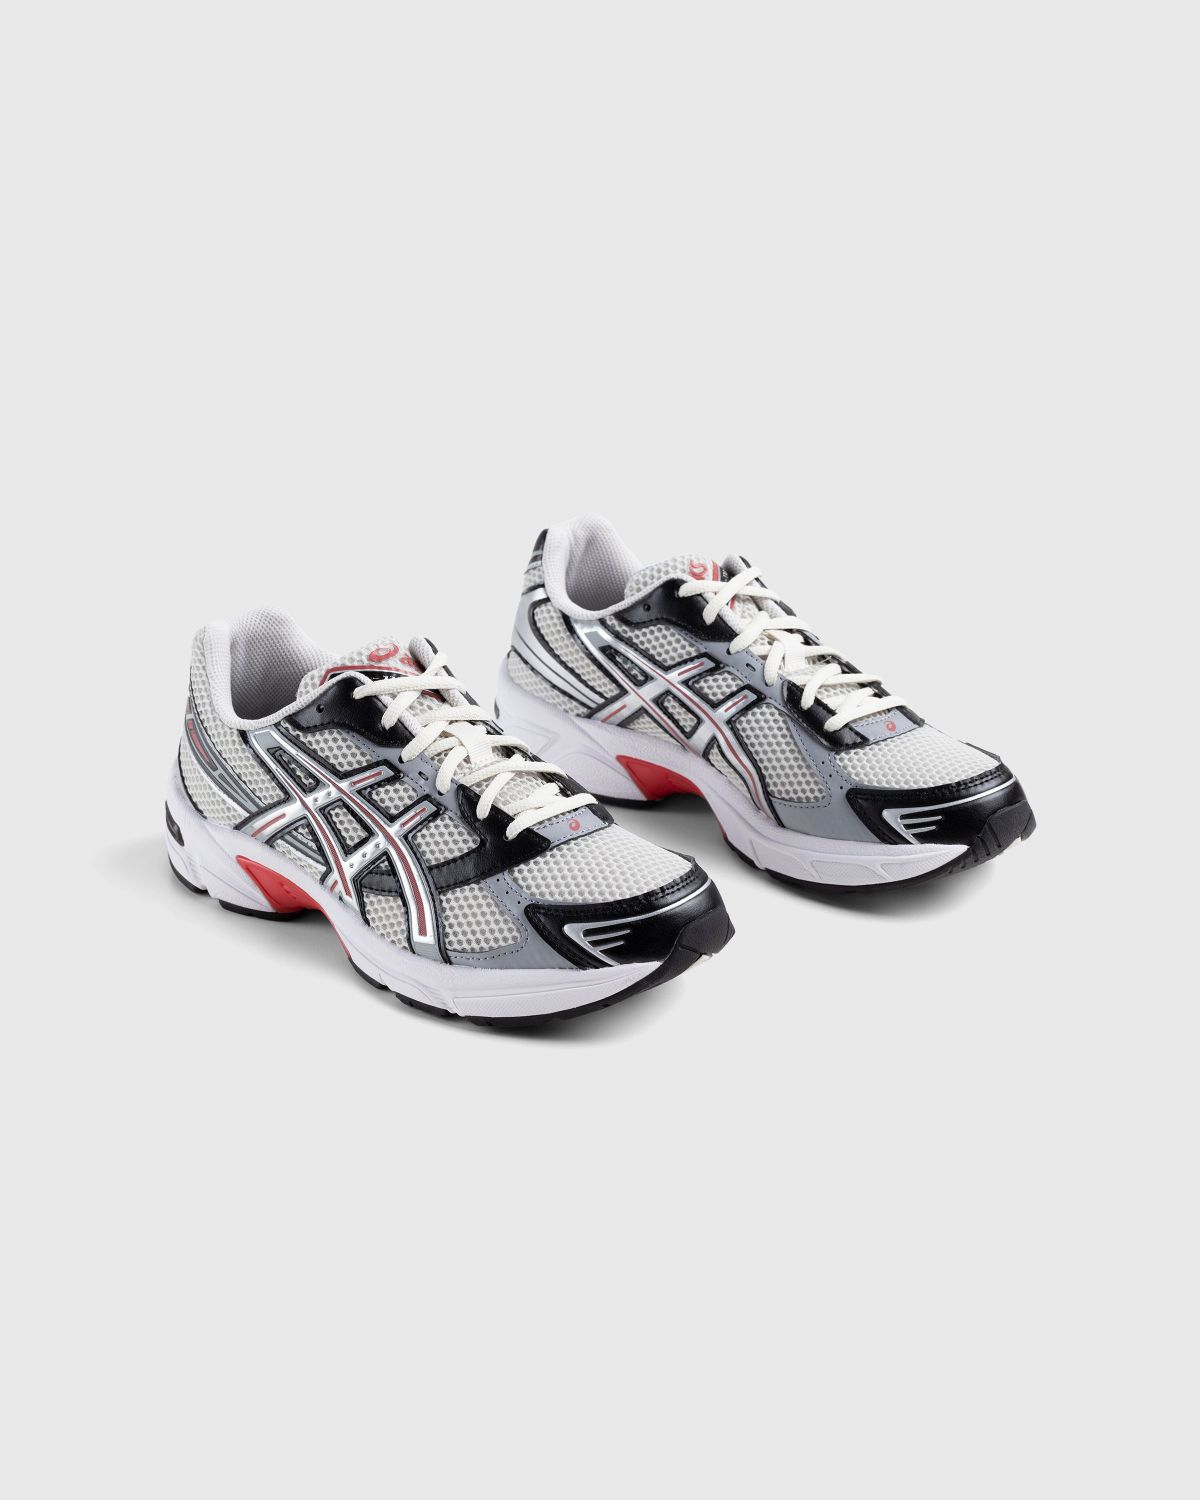 asics – Gel-1130 Smoke Grey Pure Silver - Low Top Sneakers - Multi - Image 4